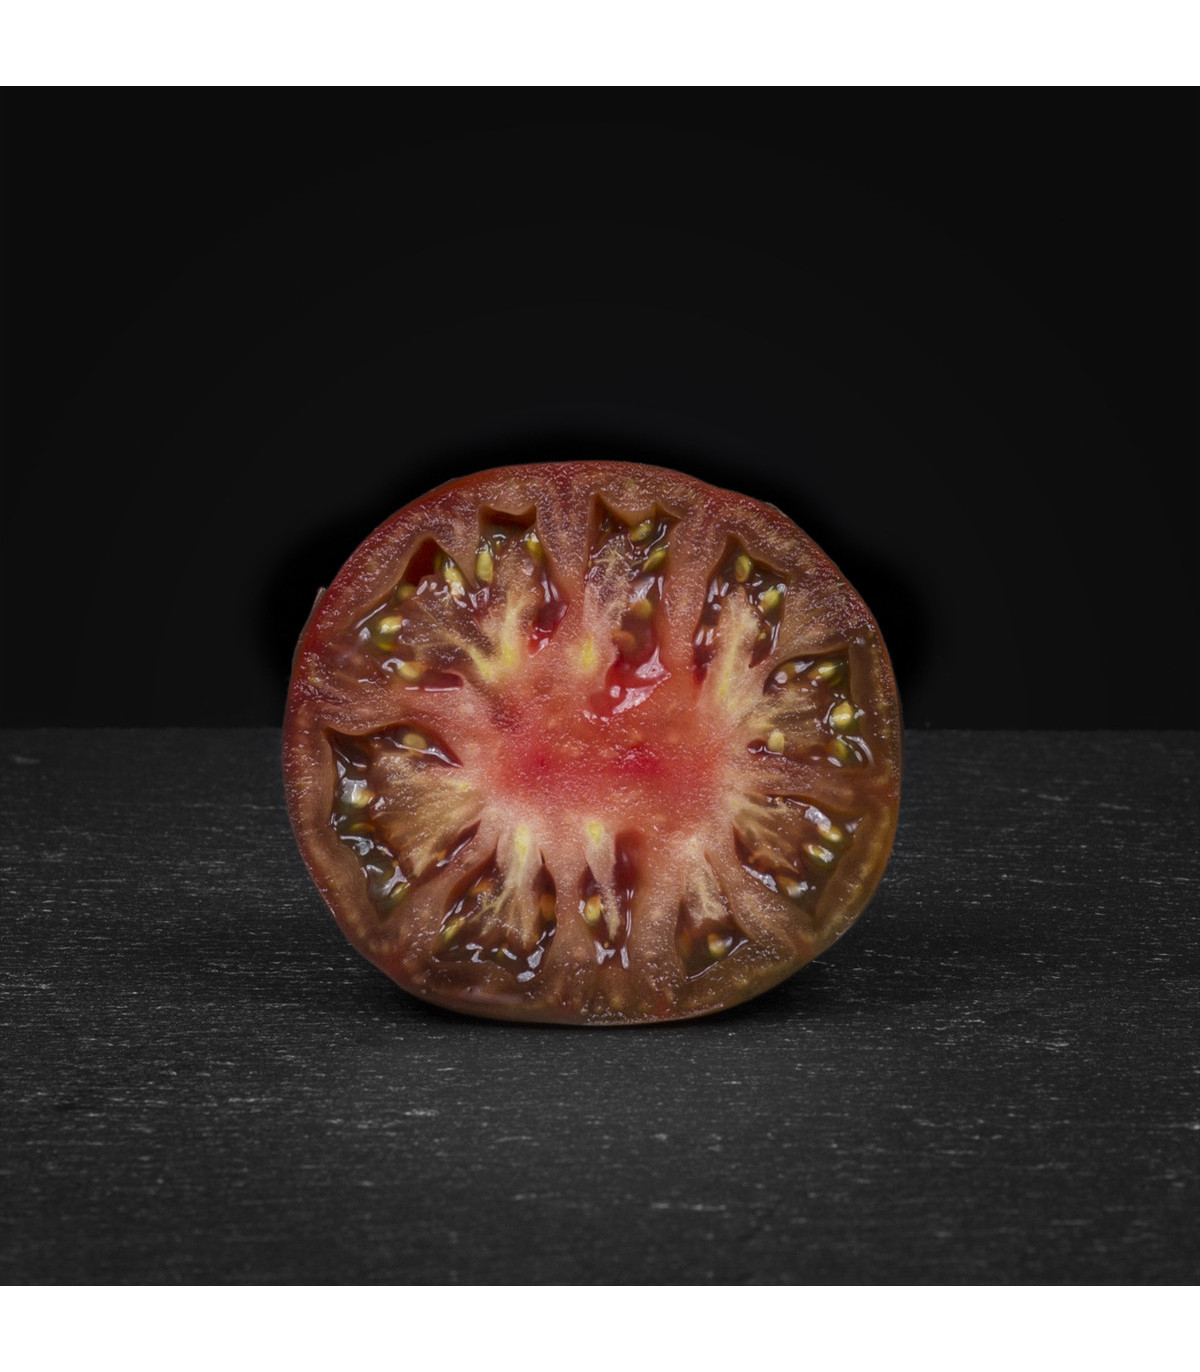 Rajče Černý muž - Solanum lycopersicum - osivo rajčat - 6 ks